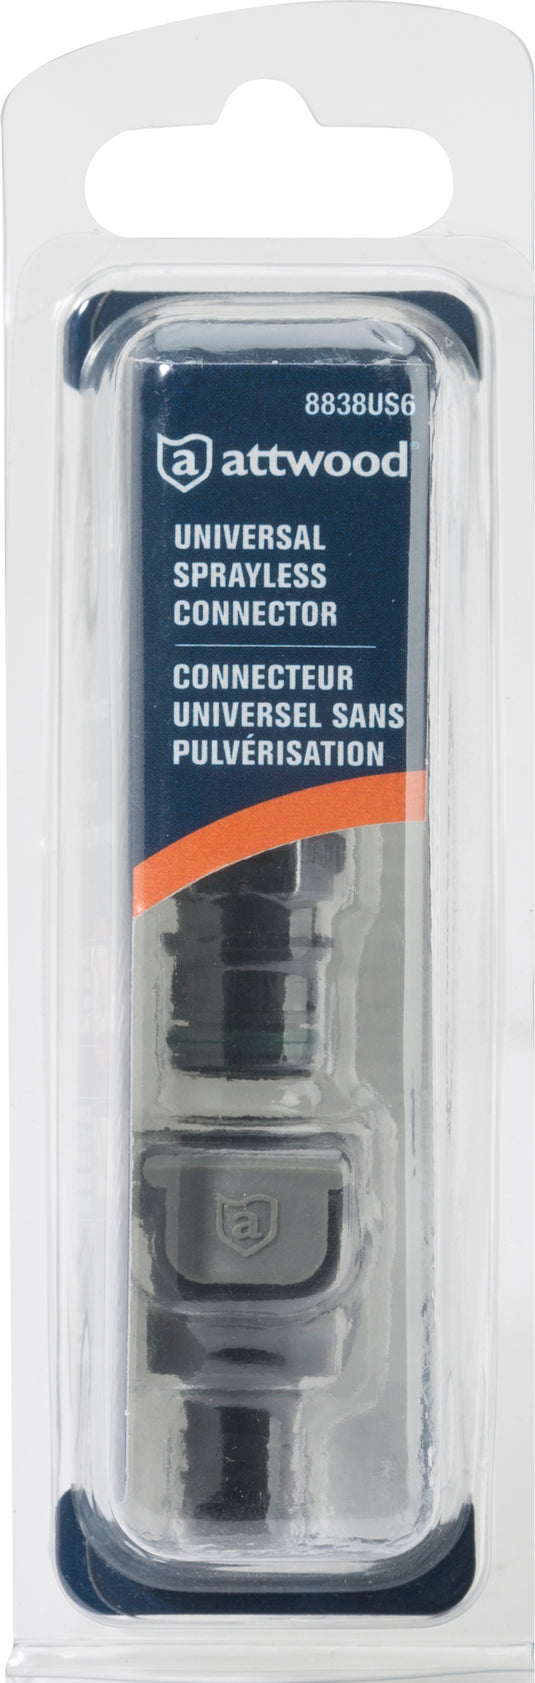 8838US6 Attwood Universal Male & Female  Sprayless Connector Kit